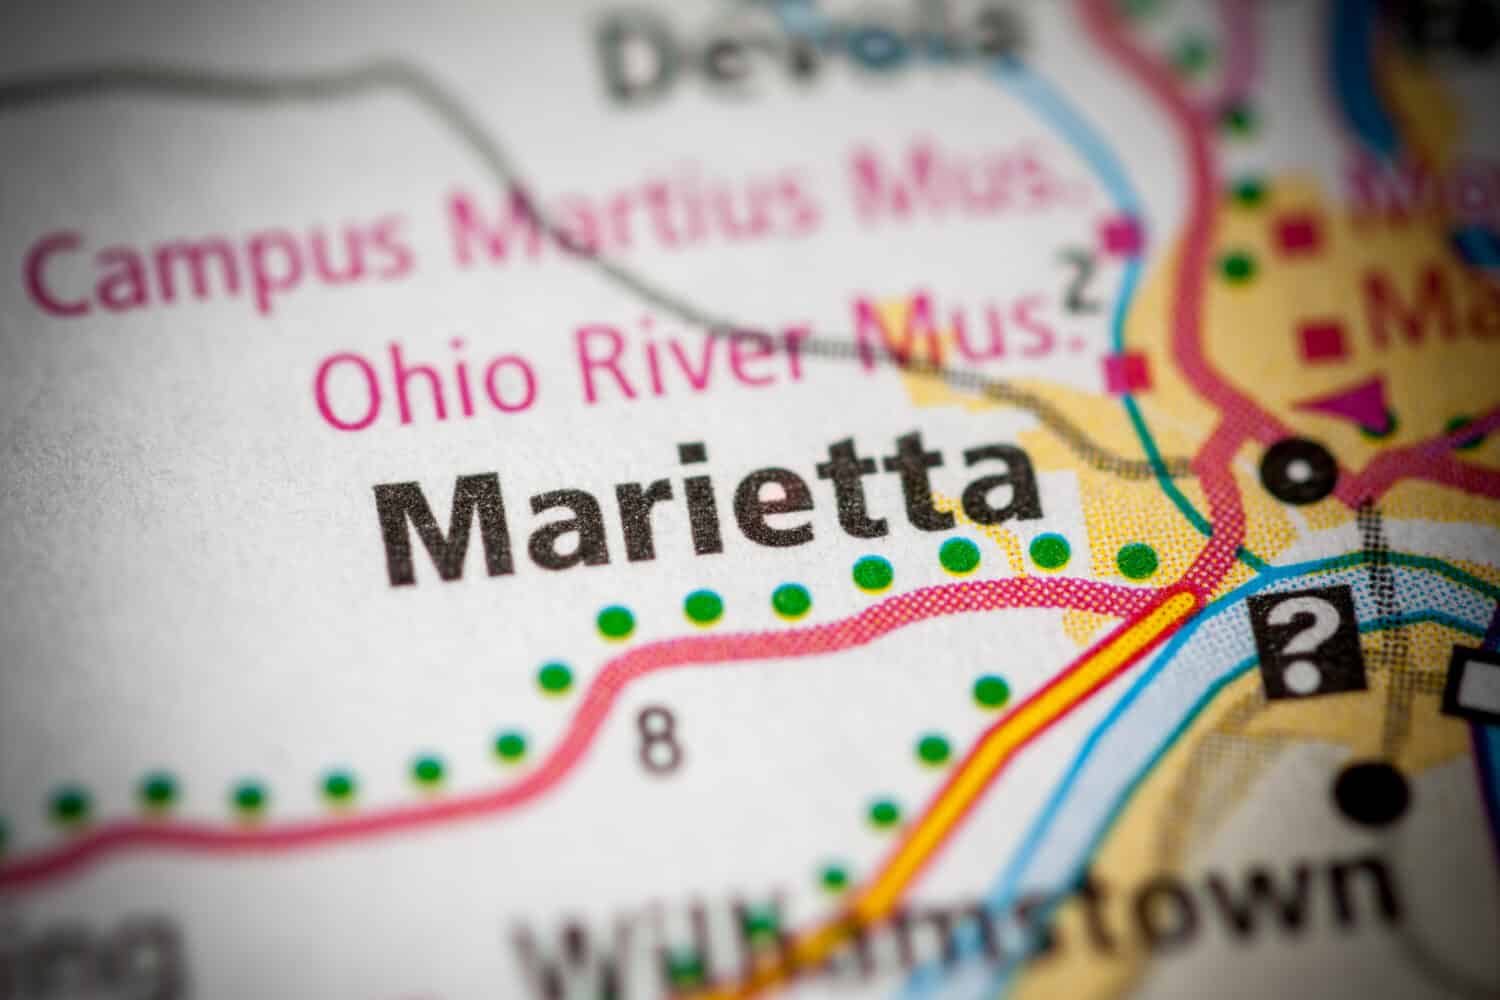 Marietta.  Ohio.  Stati Uniti d'America